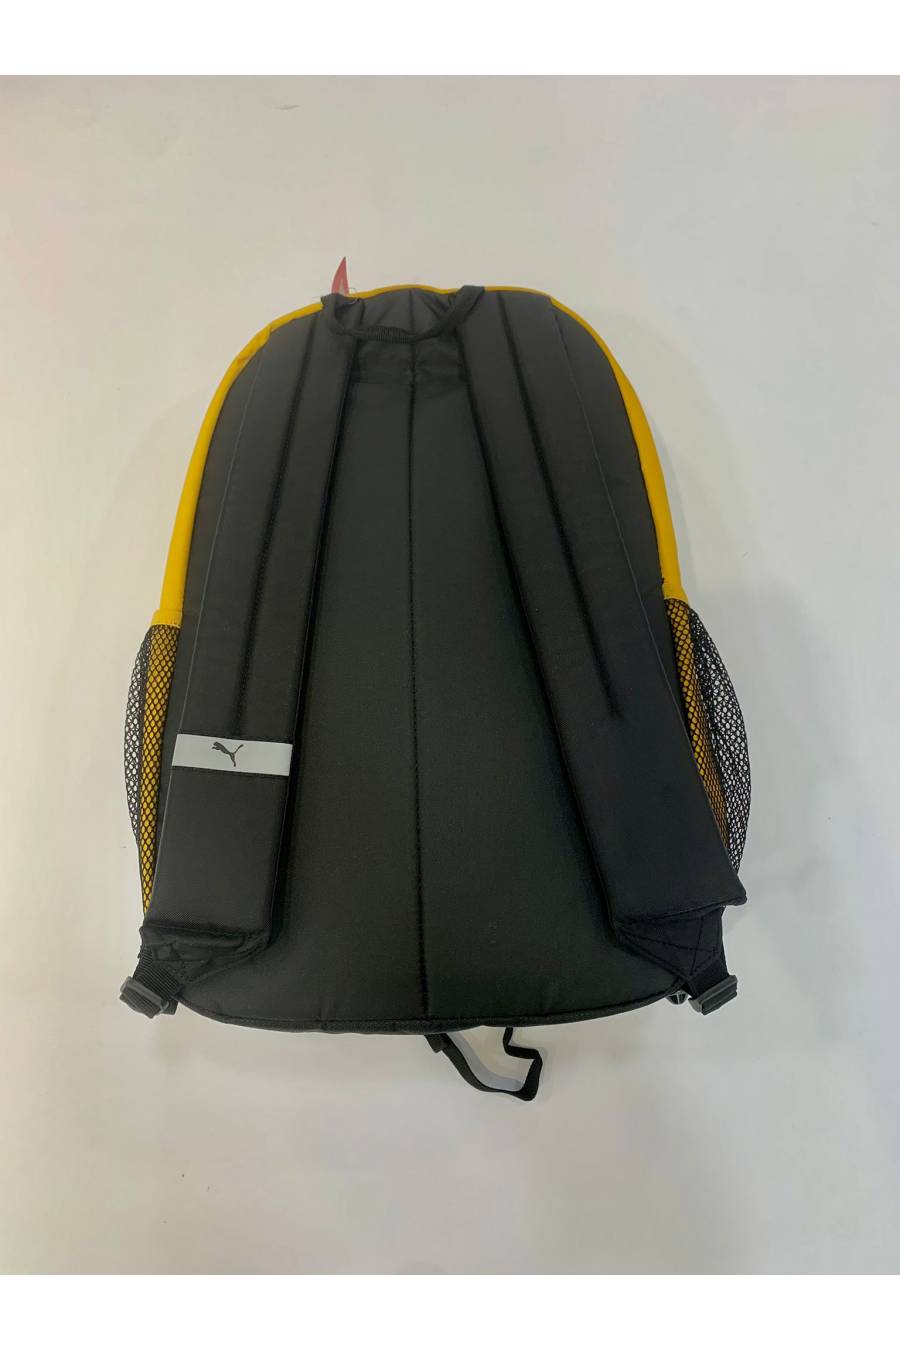 Mochila Puma Plus Backpack Mineral Yellow - Msdsport by Masdeporte (aun no disponible)